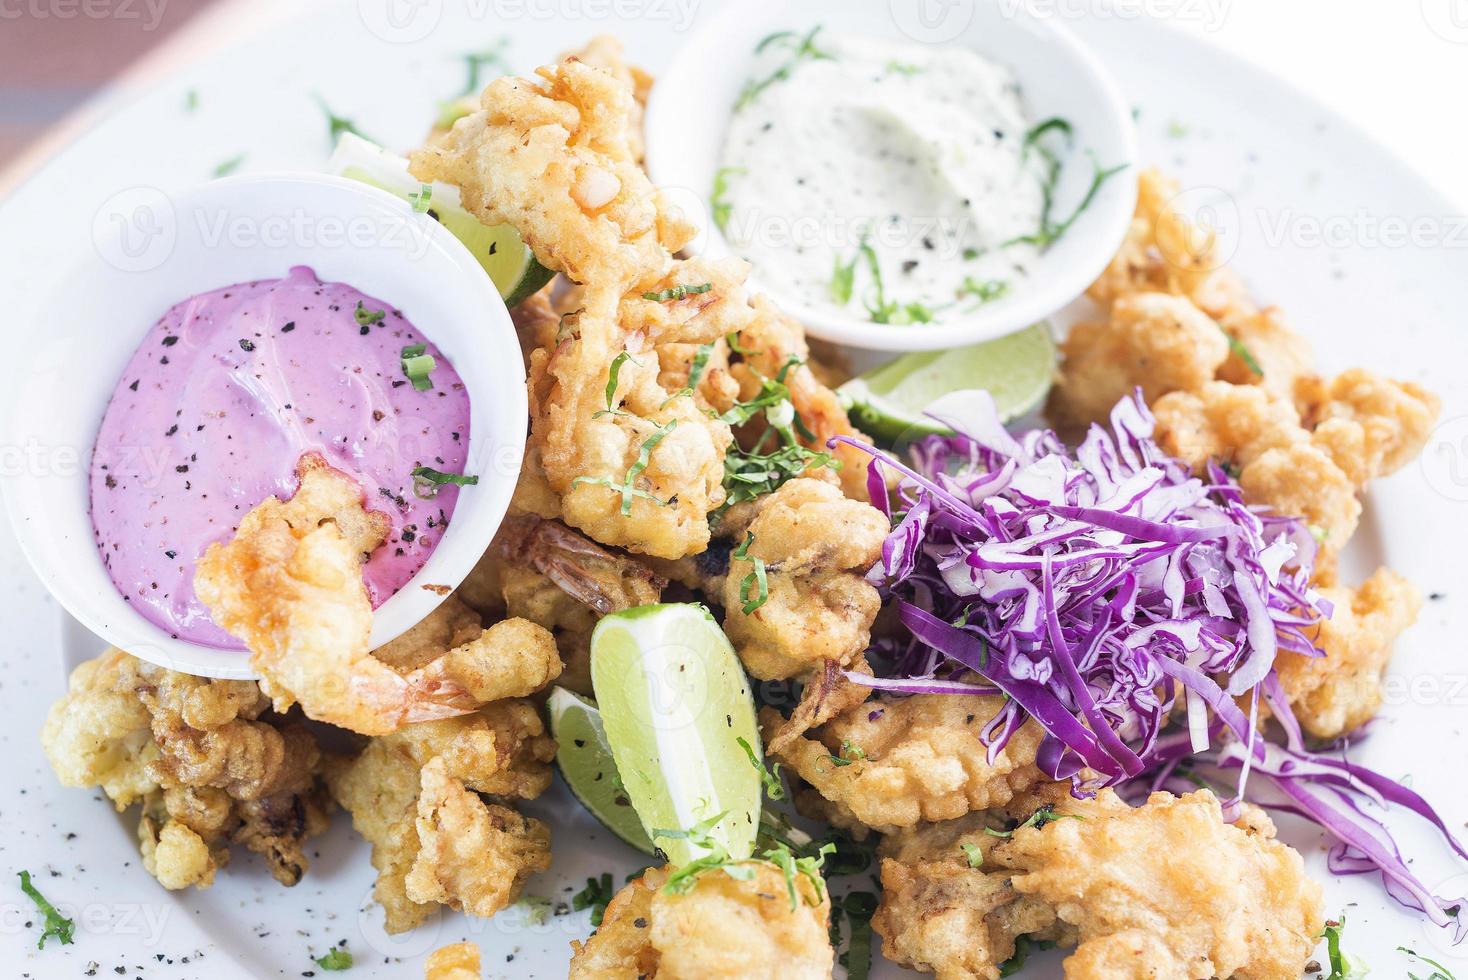 Deep-fried tempura seafood modern fusion gourmet food cuisine meal tapas snack photo